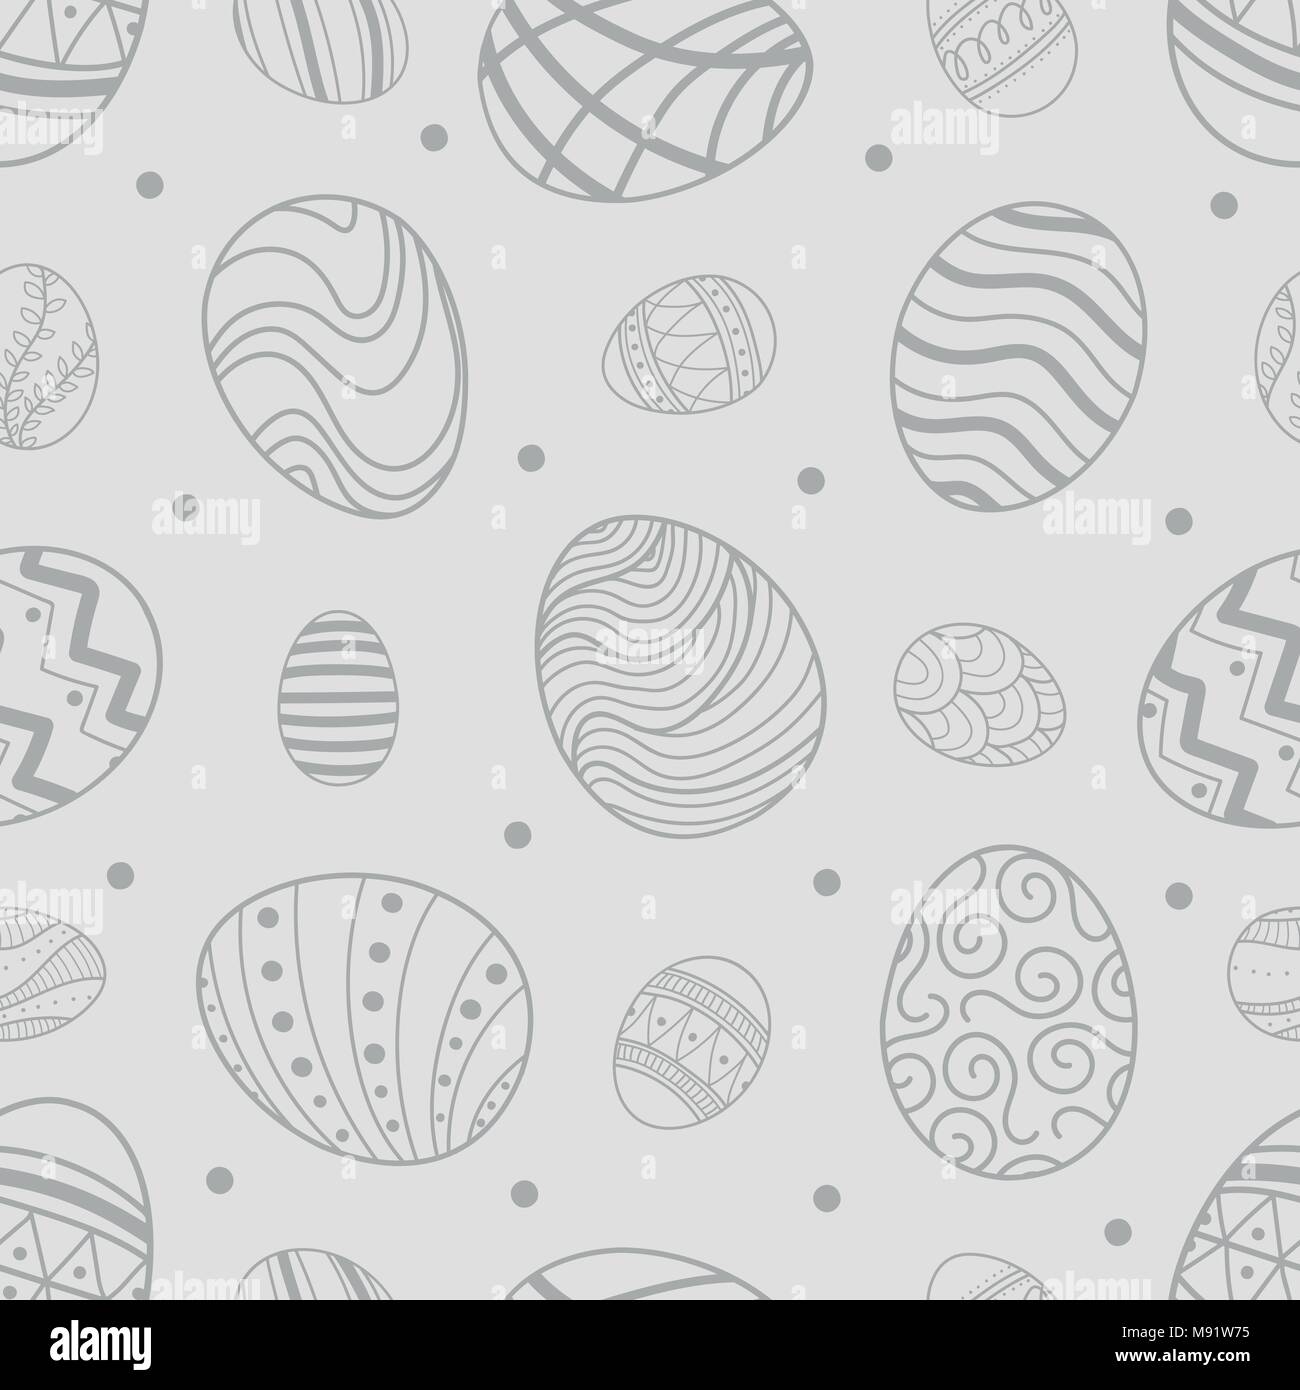 Easter eggs in gray outline and dots random on light gray background. Cute hand drawn seamless pattern design for Easter festival in vector illustrati Stock Vector